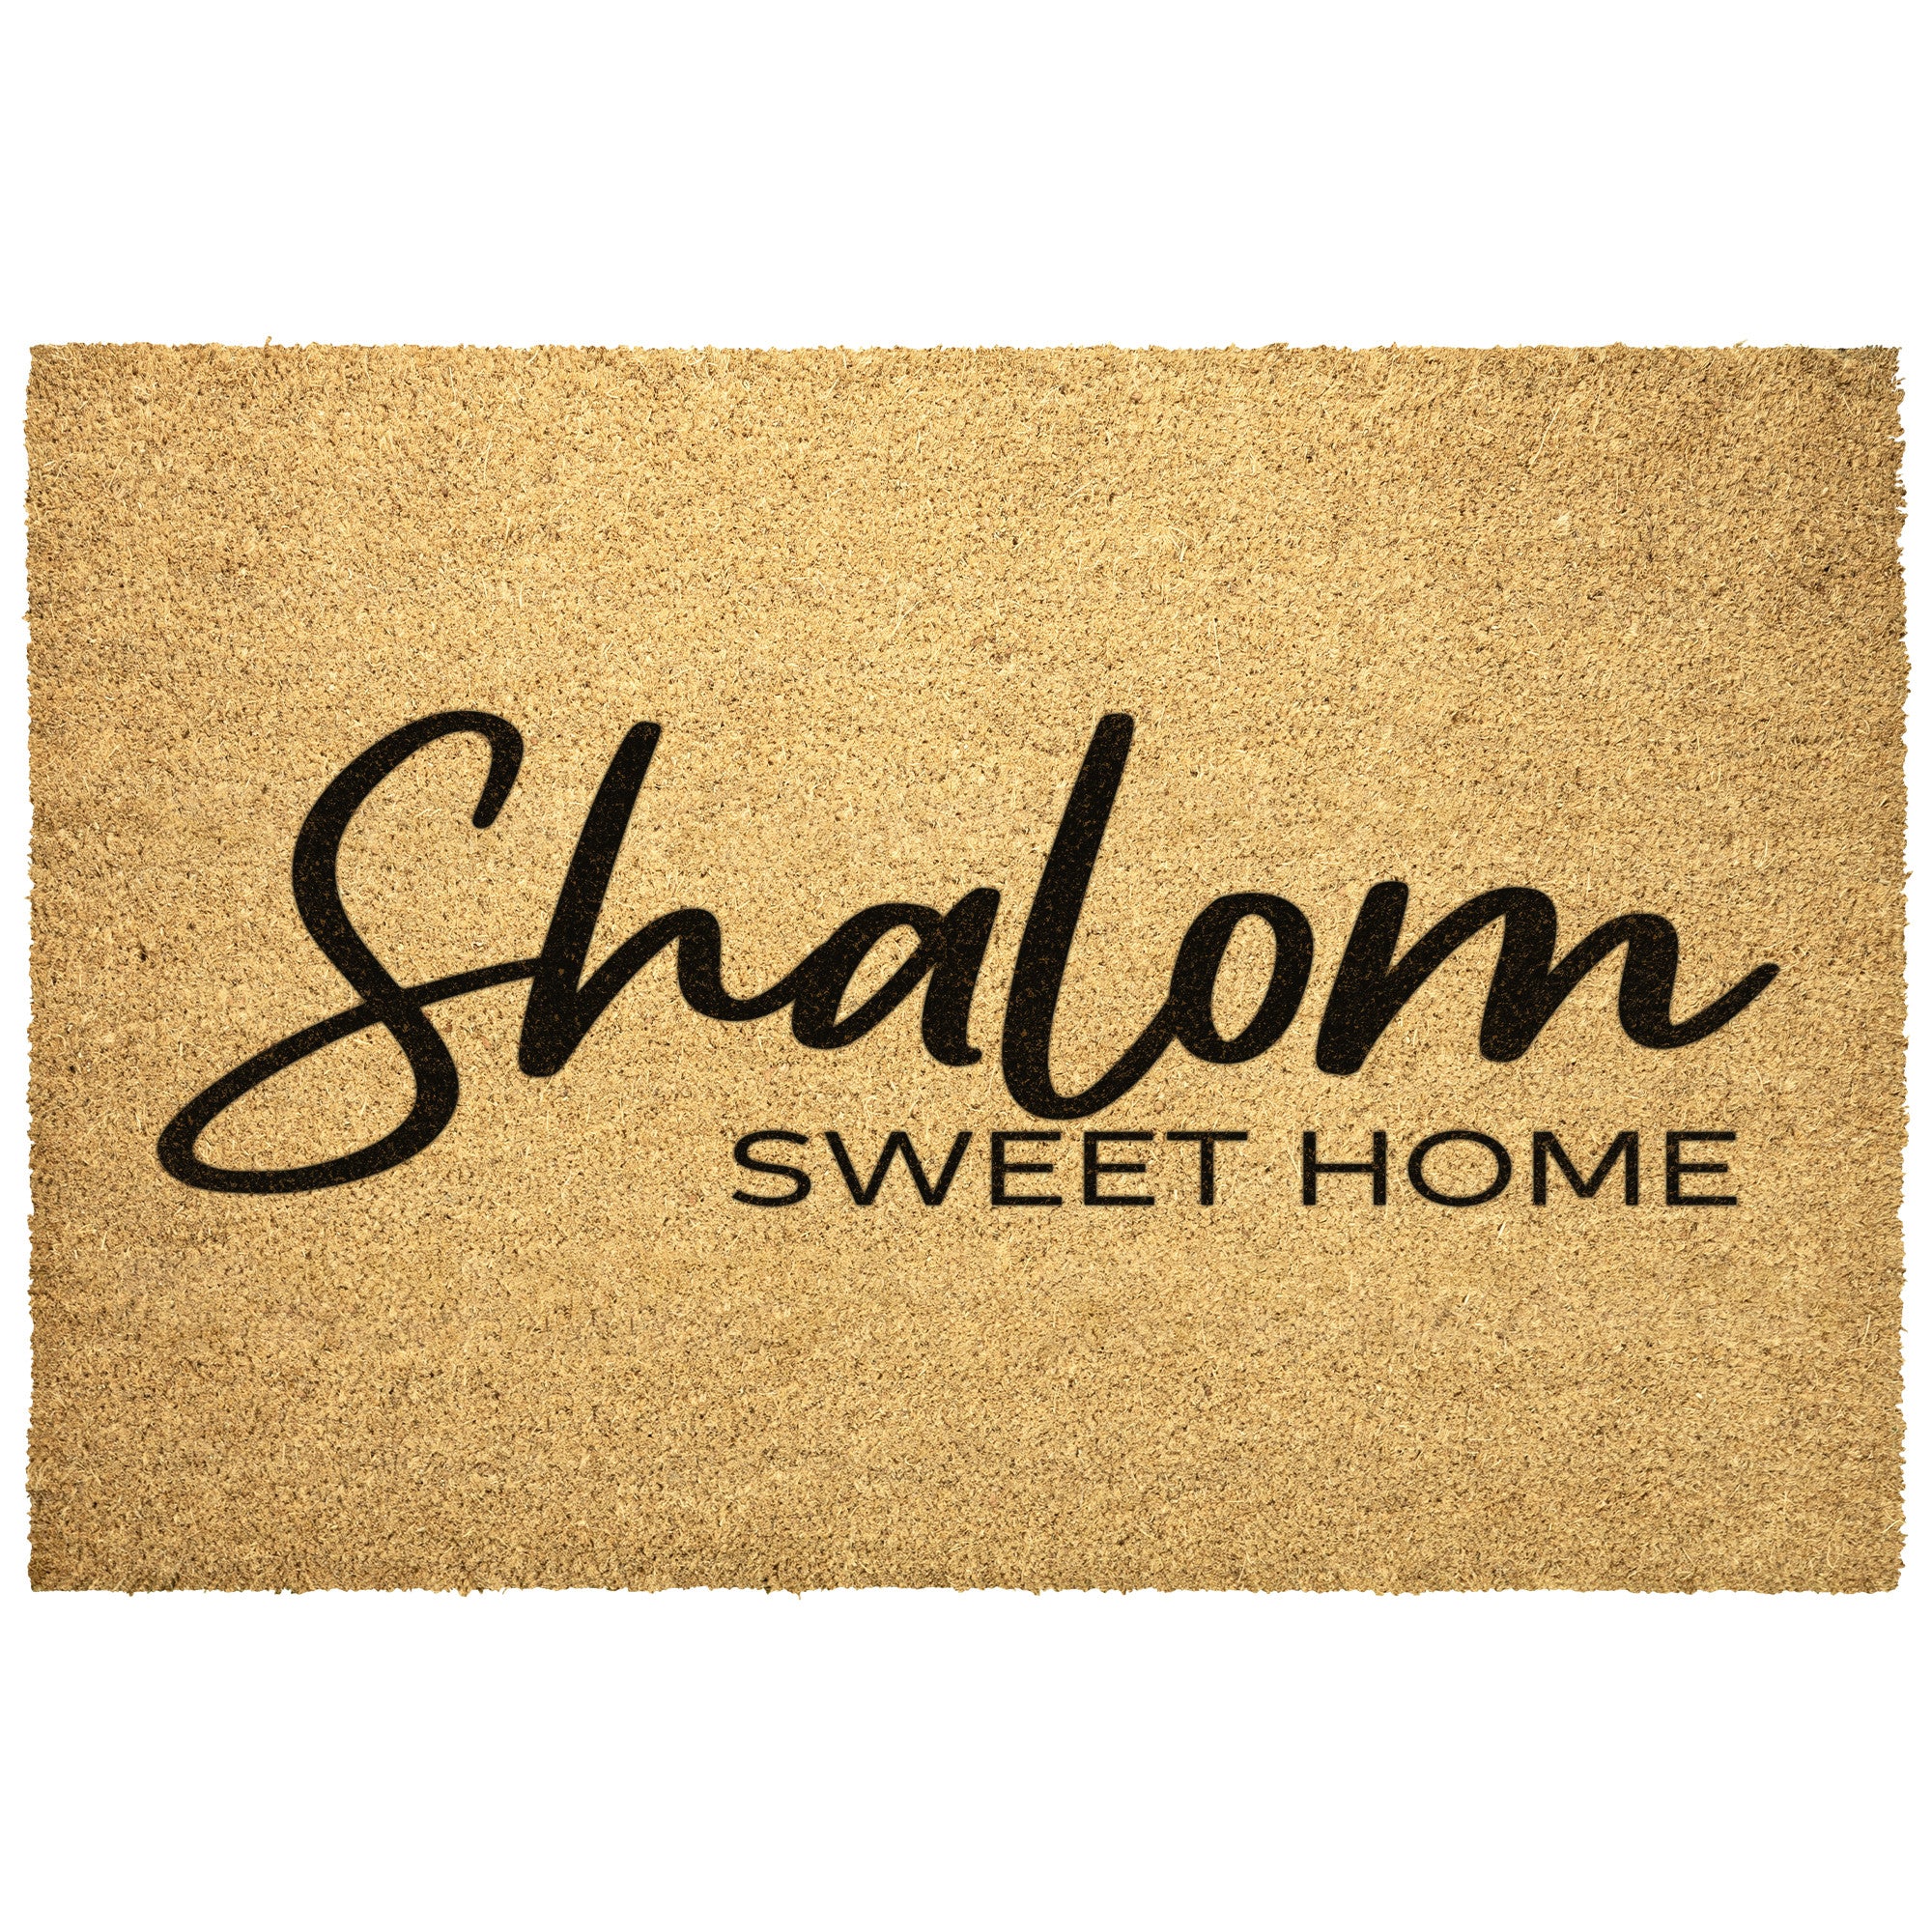 Shalom Sweet Home Doormat teelaunch